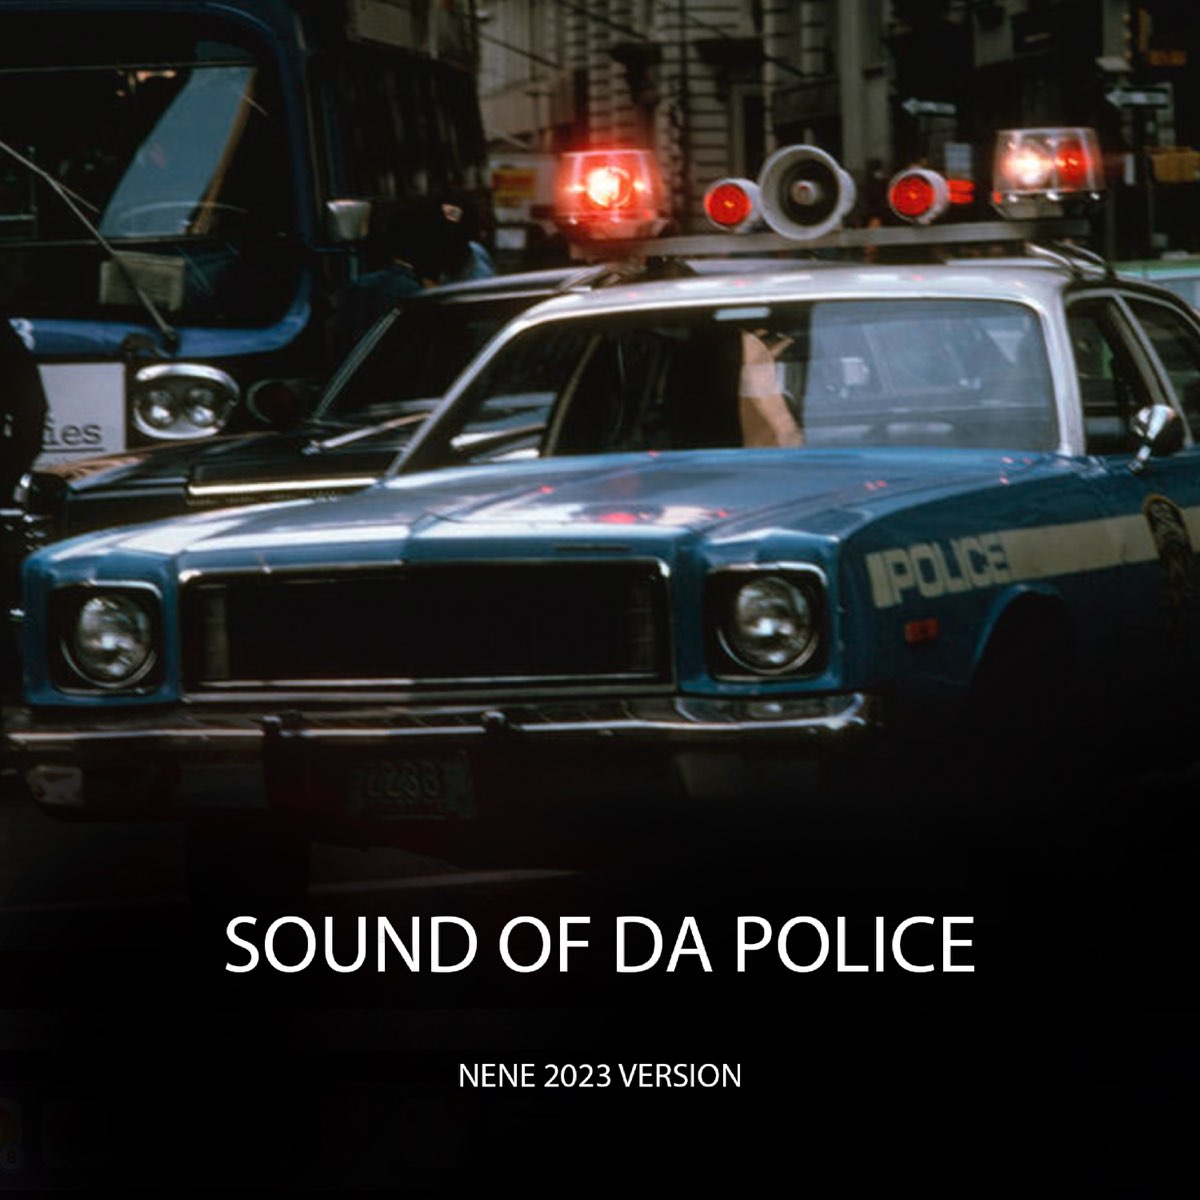 Sound of da Police - Single - Album by Nene - Apple Music